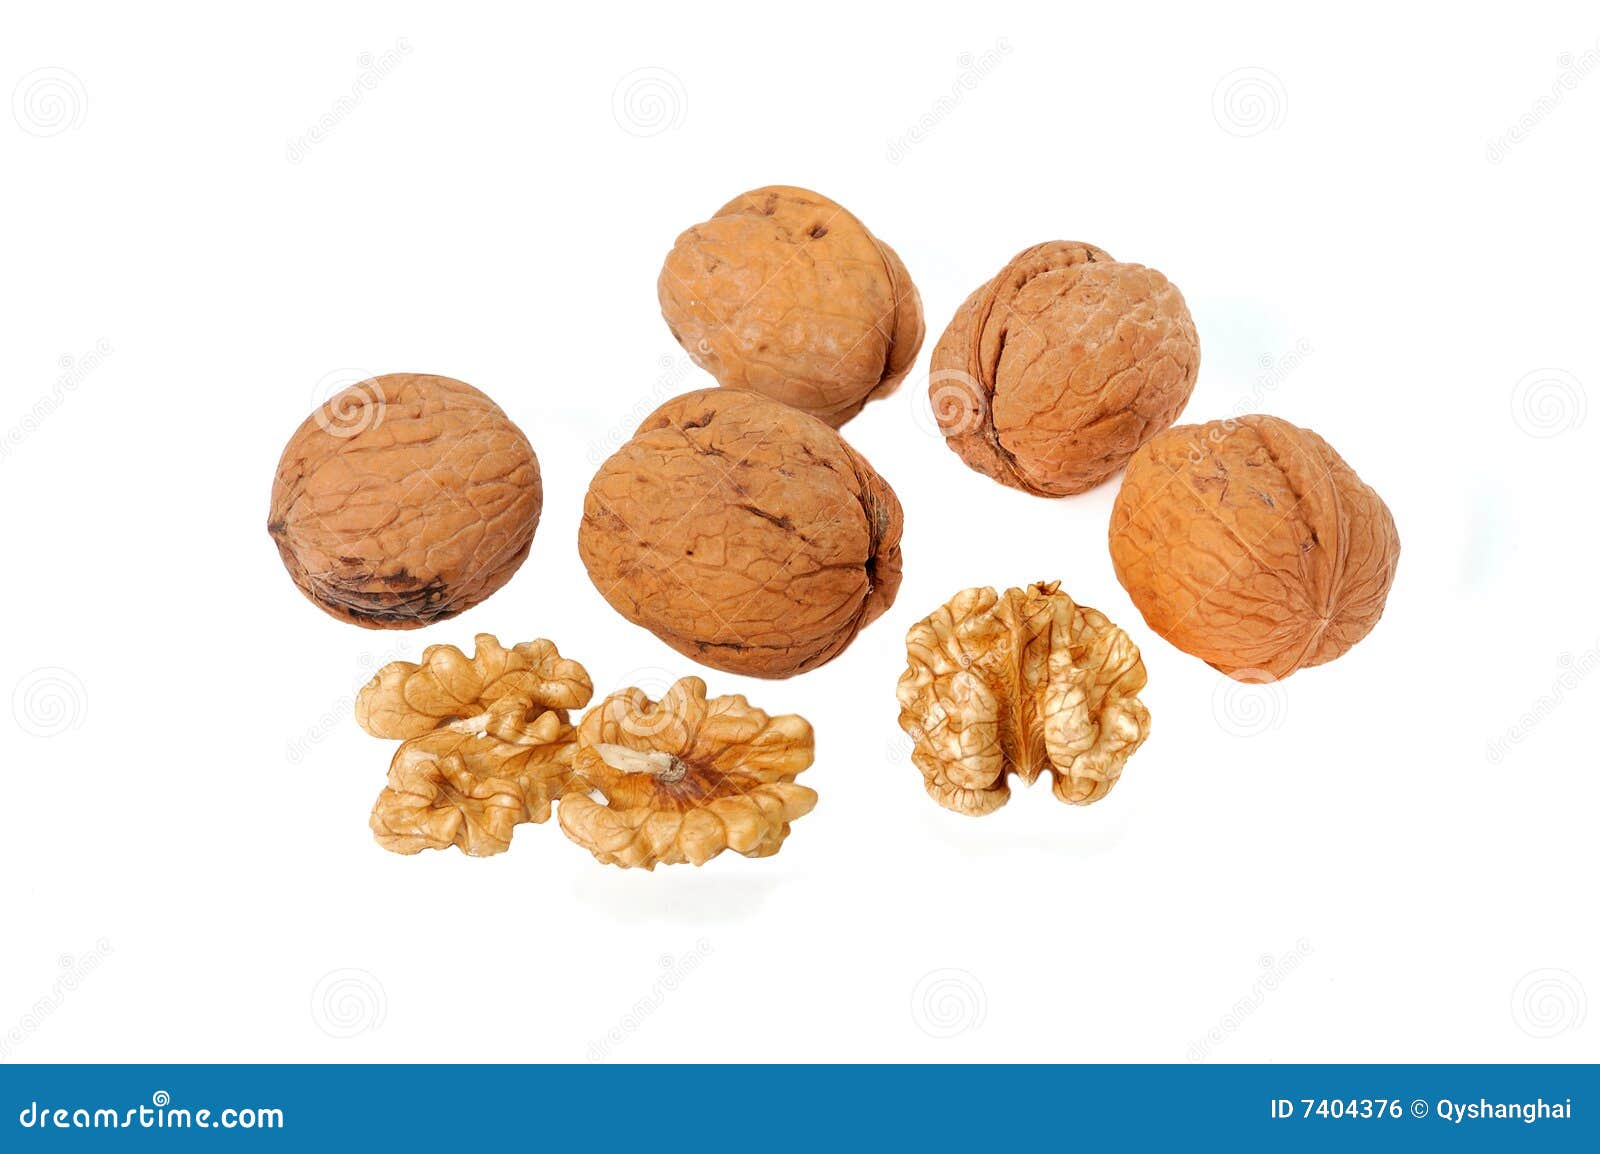 Walnut stock photo. Image of background, nuts, nutrition - 7404376